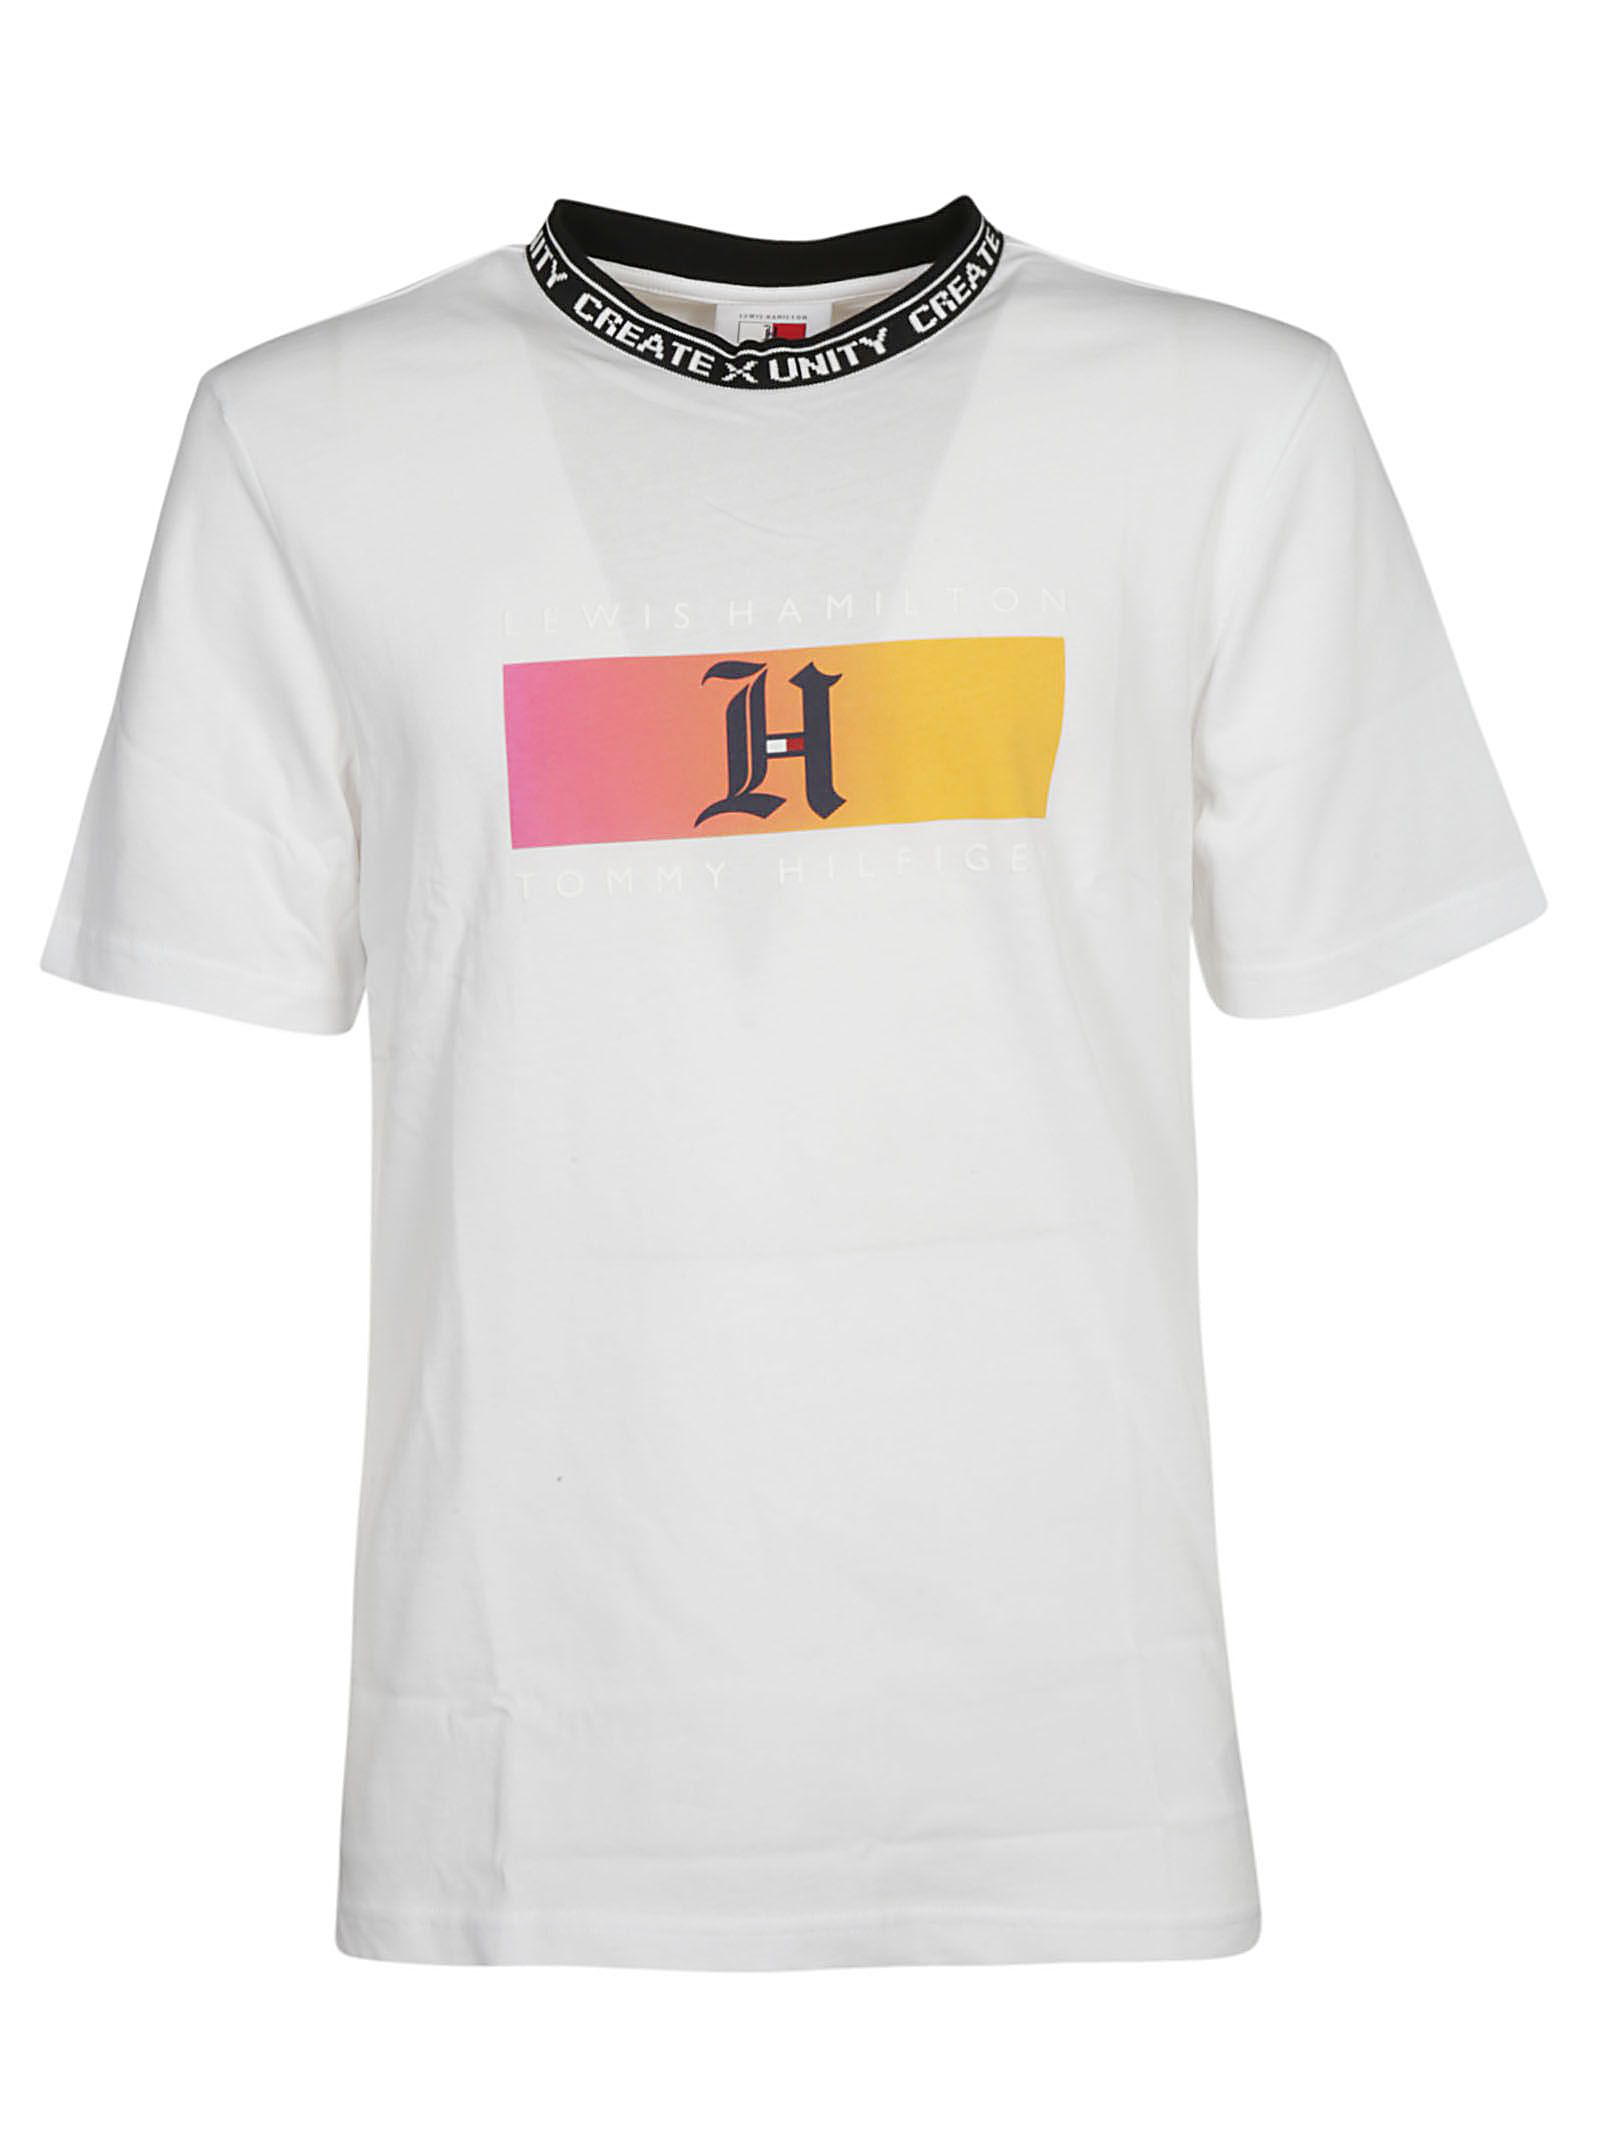 lewis hamilton monogram shirt